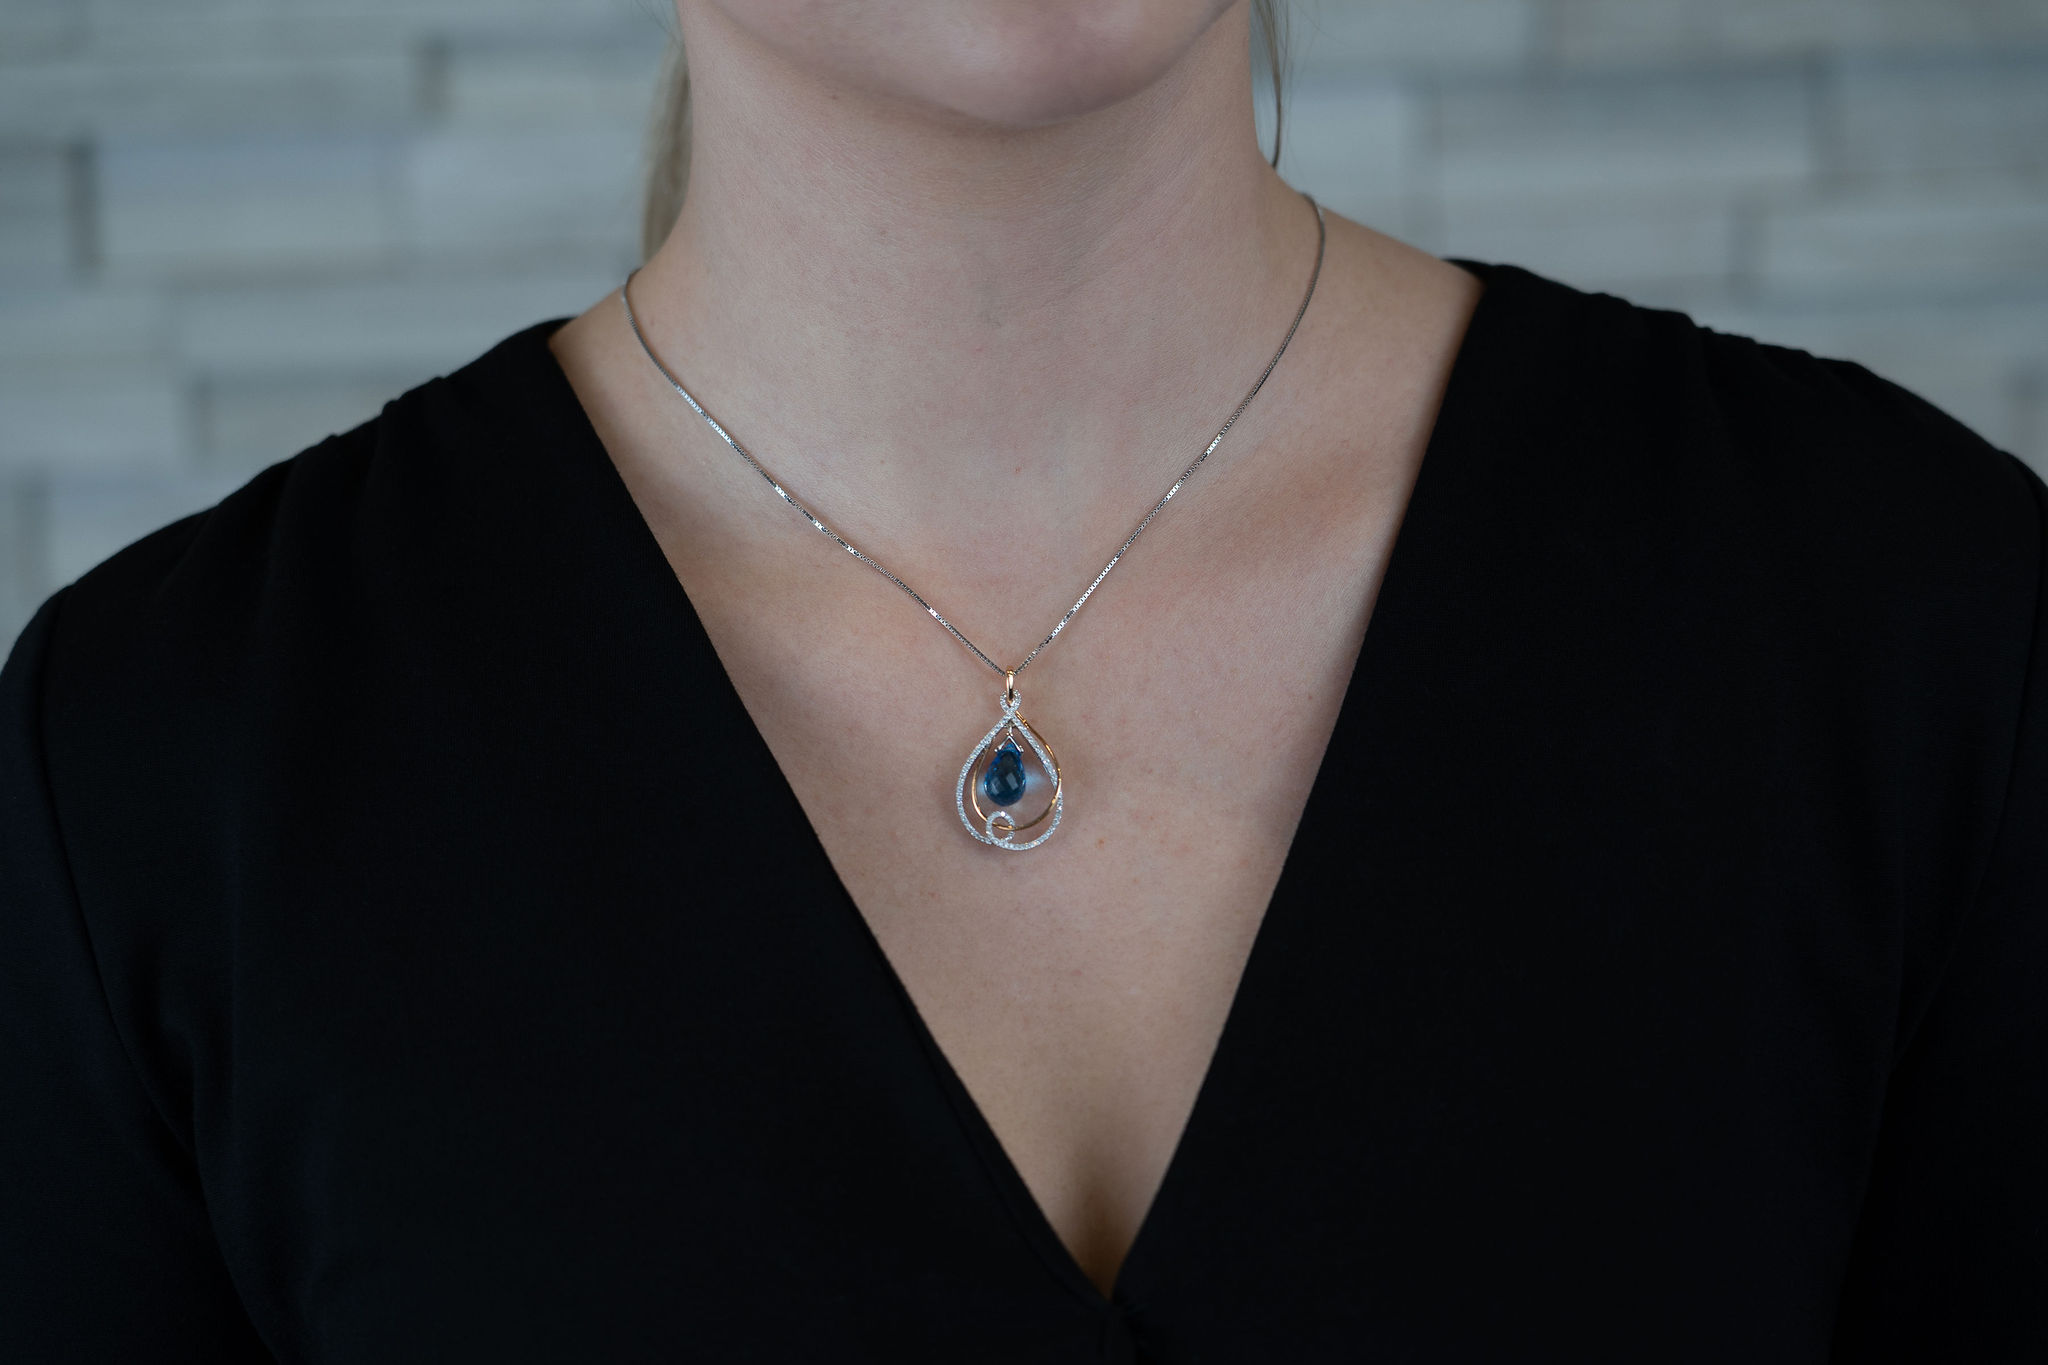 Jacob Matthew Jeweler's custom design - blue necklace